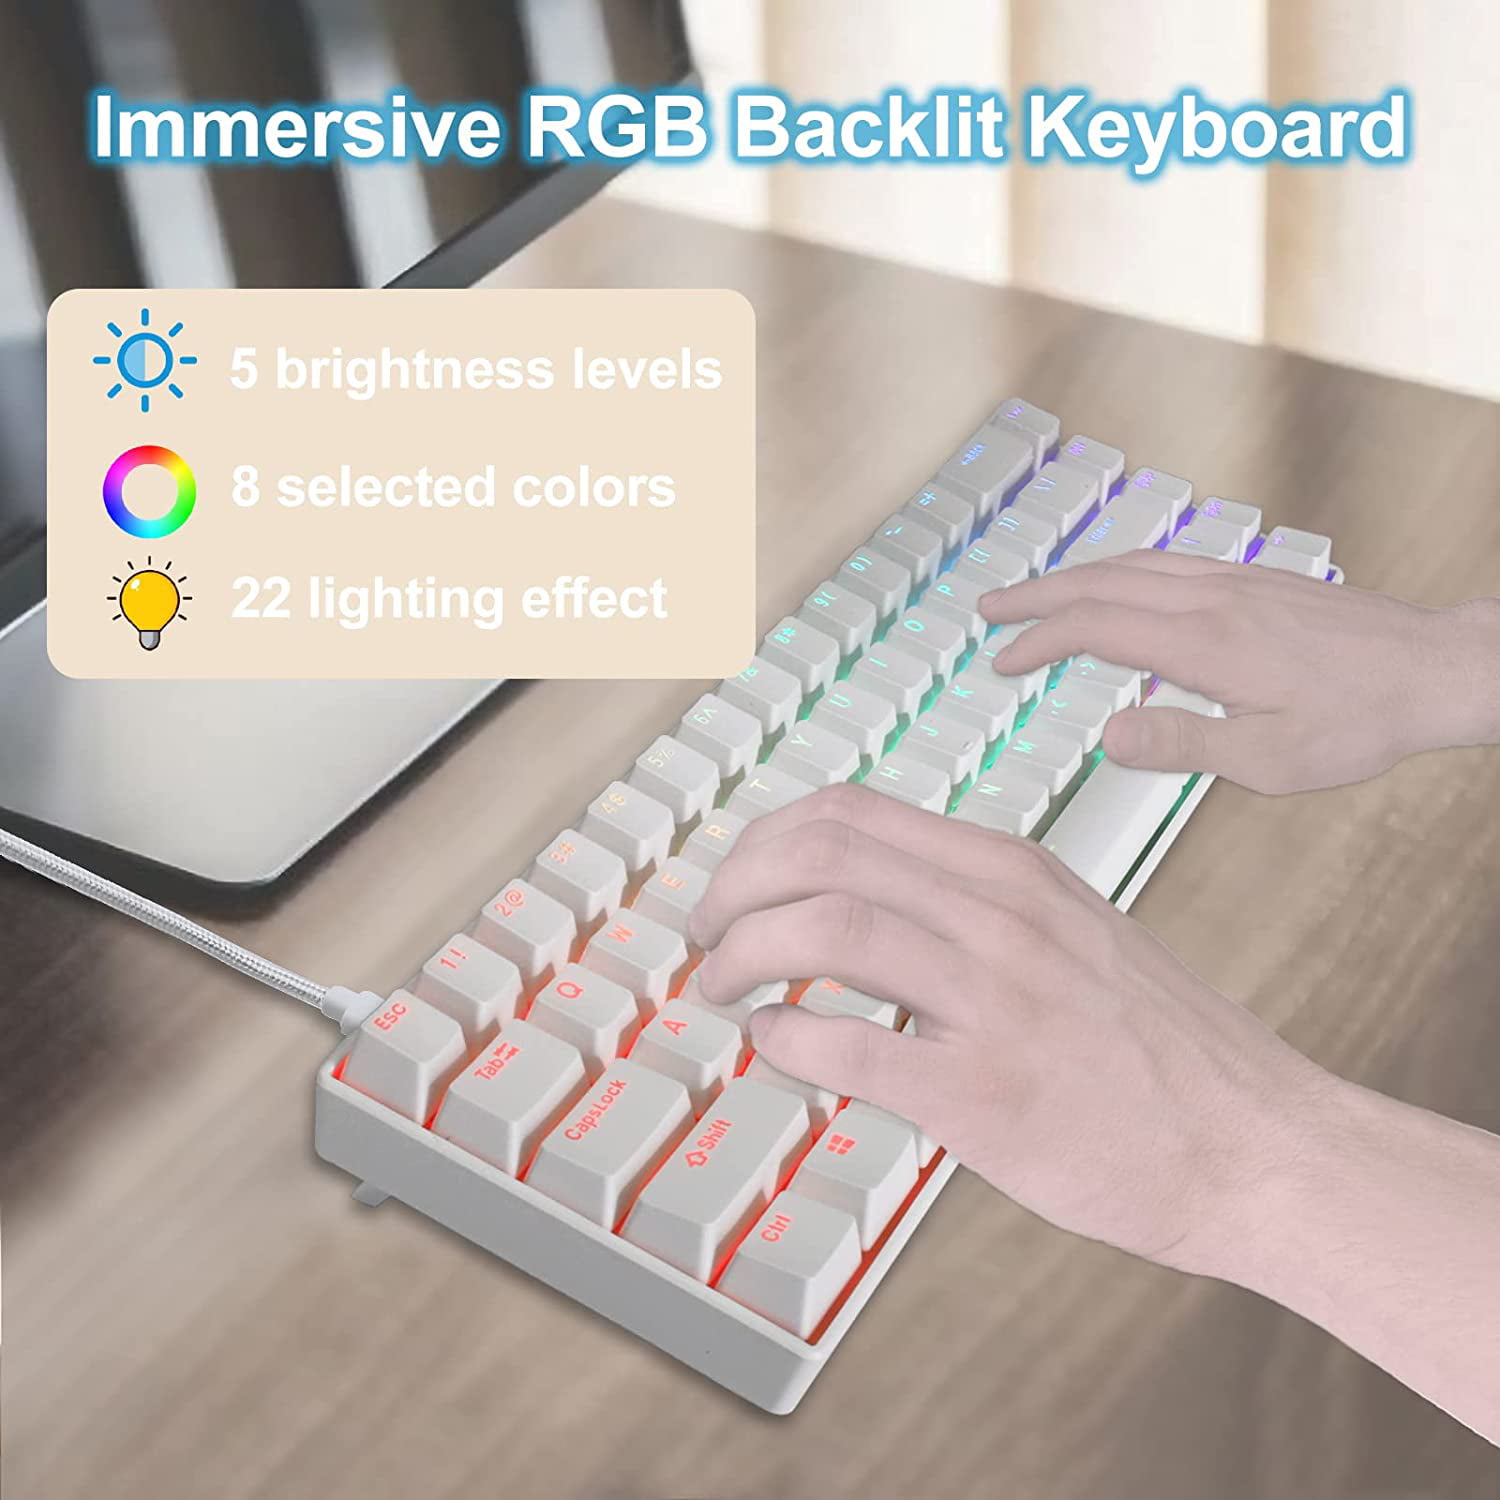  NACODEX Mini 60% Mechanical Gaming Keyboard - PBT Pudding  Keycap Bluetooth 5.0 Rainbow Keyboard - 1000mAh Ultra-Compact Keyboard for  Win/Mac/PC Gamer (Blue Switch Black) : Video Games